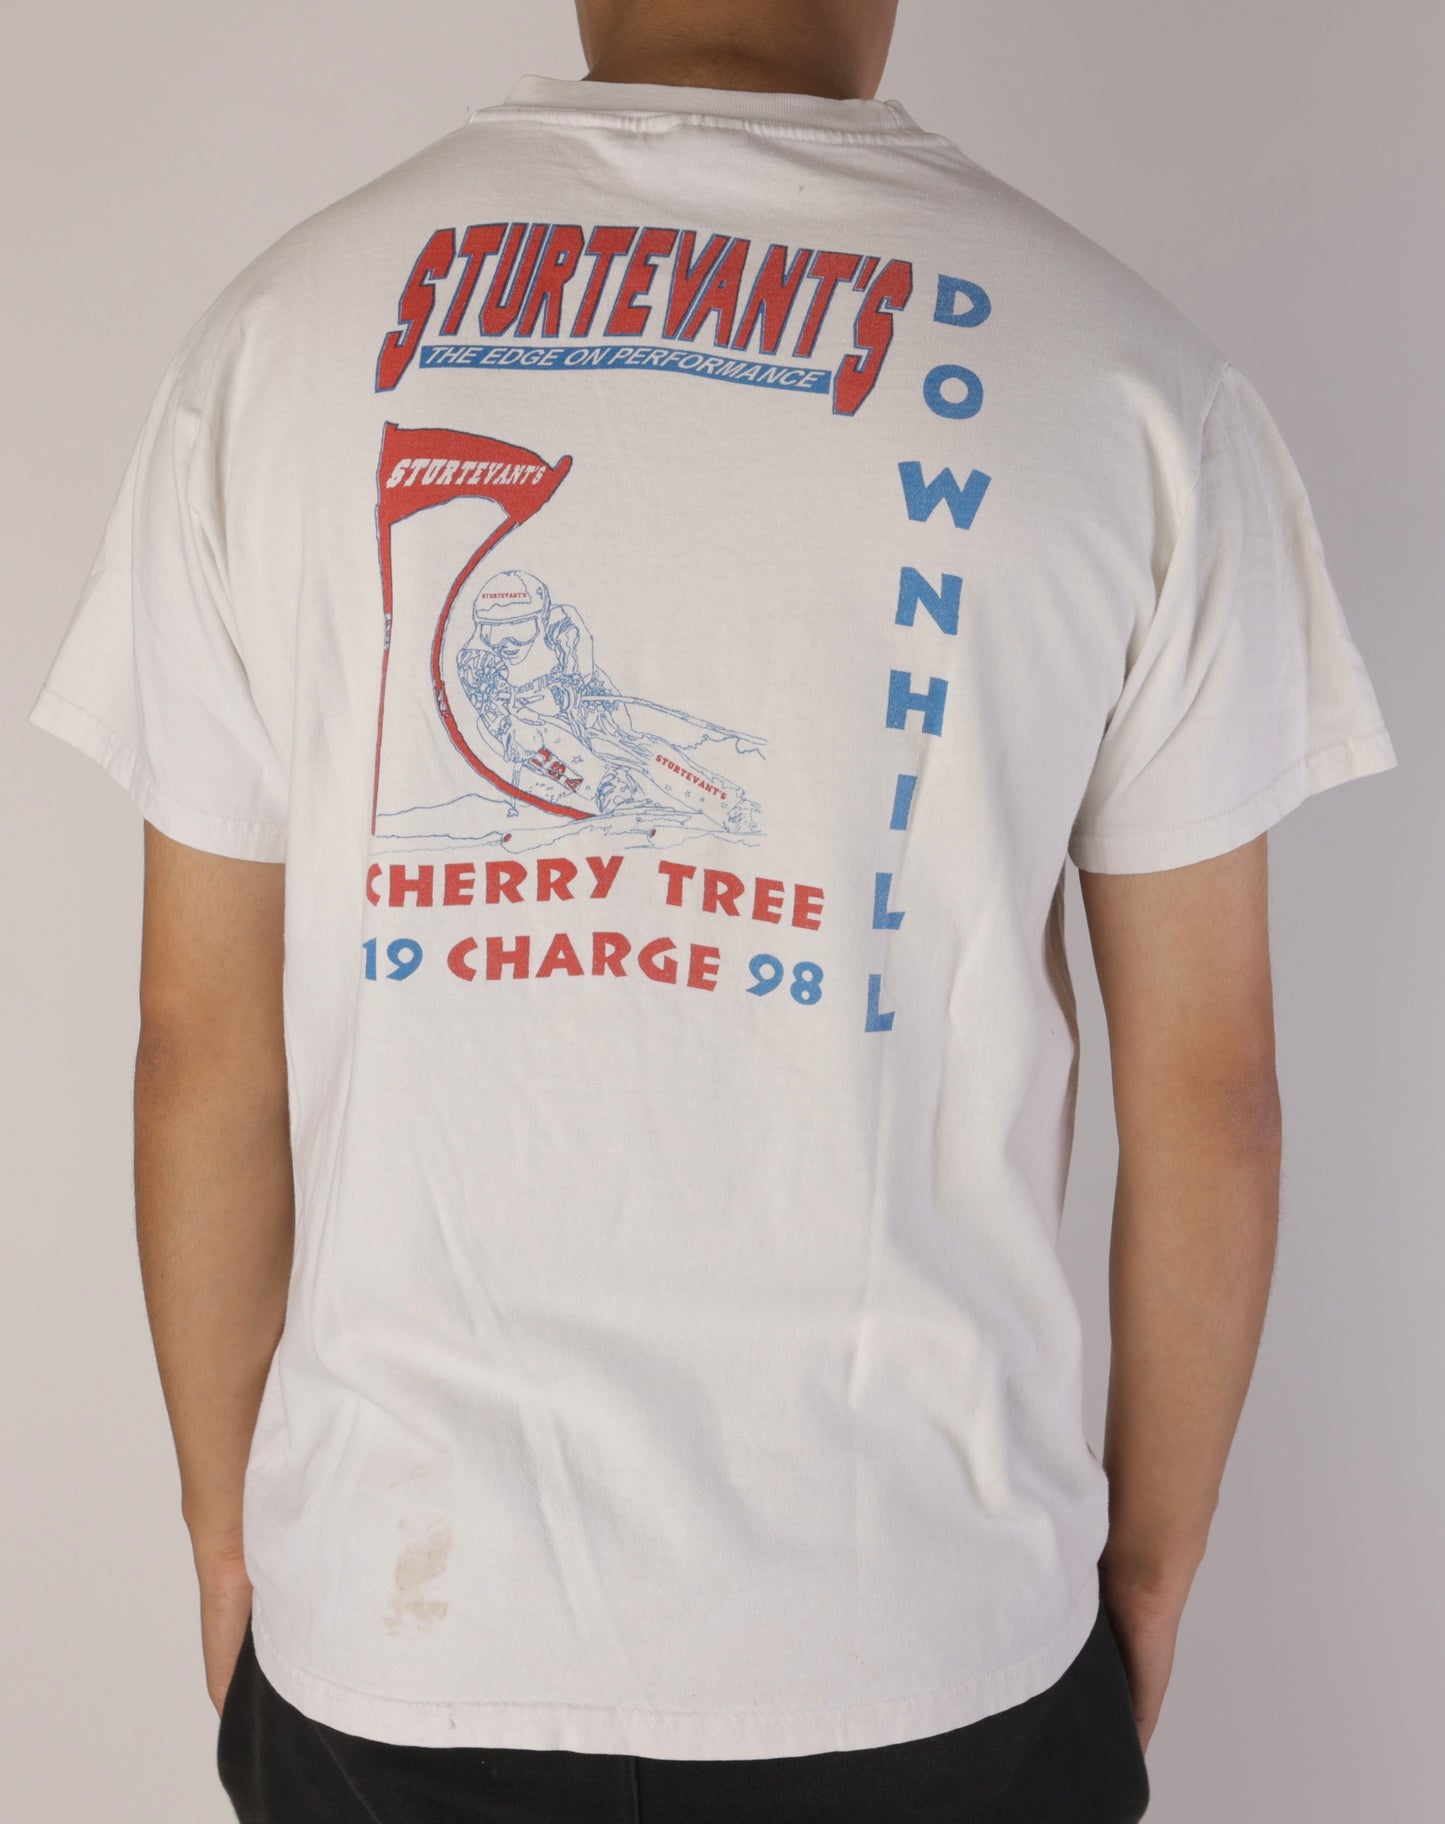 SS 1998 Sturtevant's Skiing T-Shirt Size M